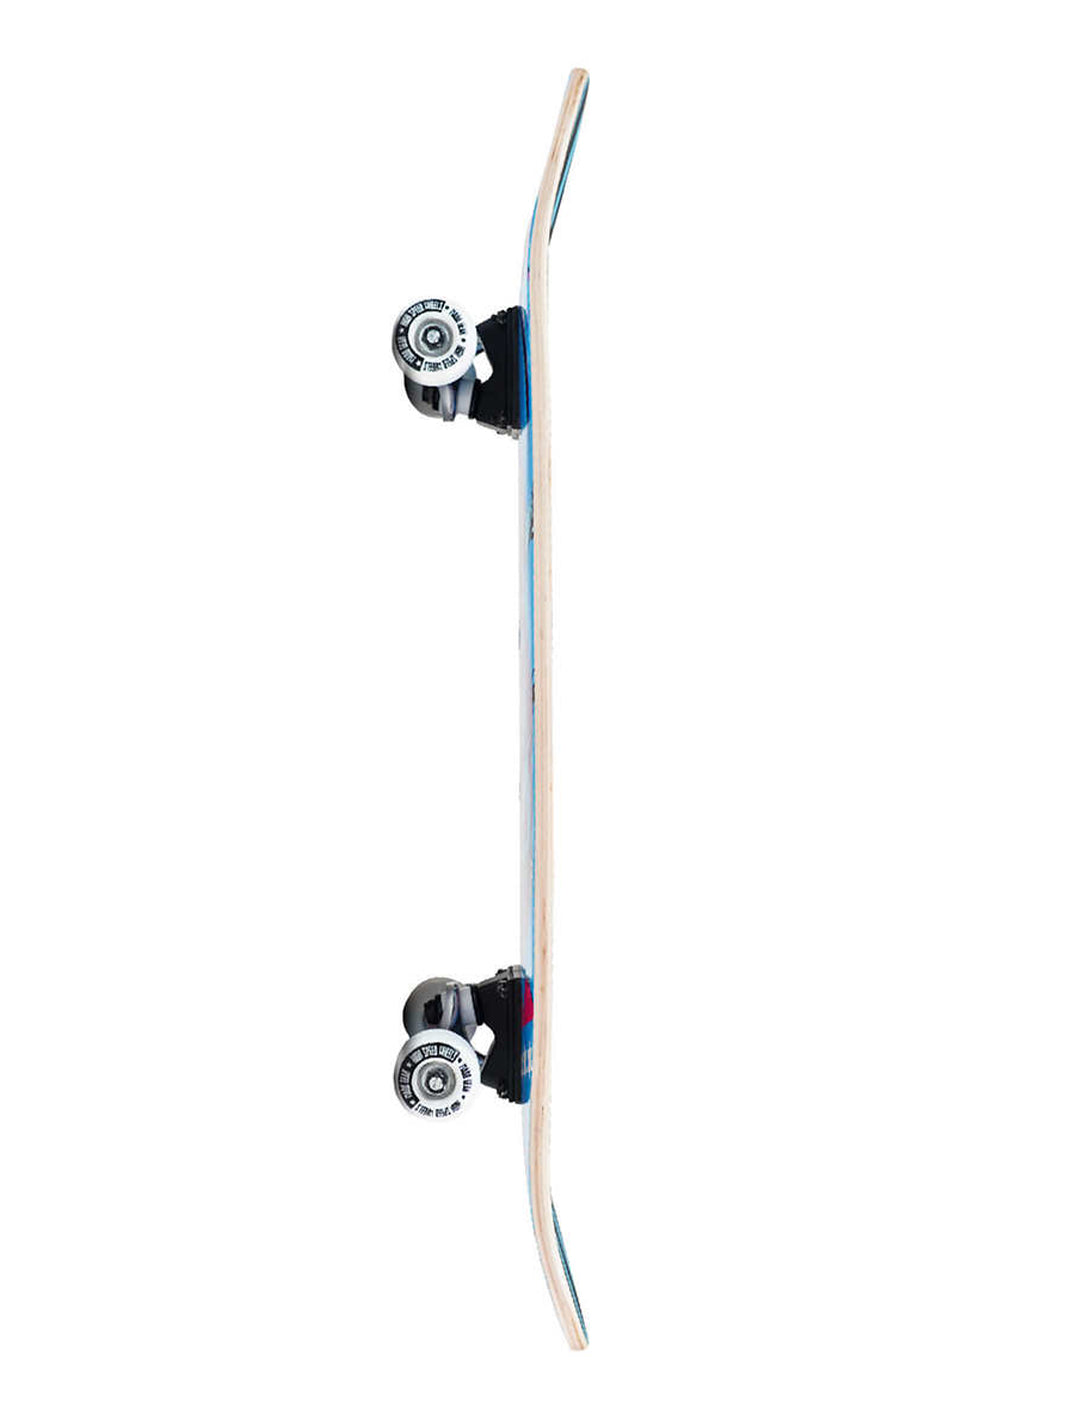 Madd Gear Complete Skateboard Deck Kids Quality Blue White Wheels Ply